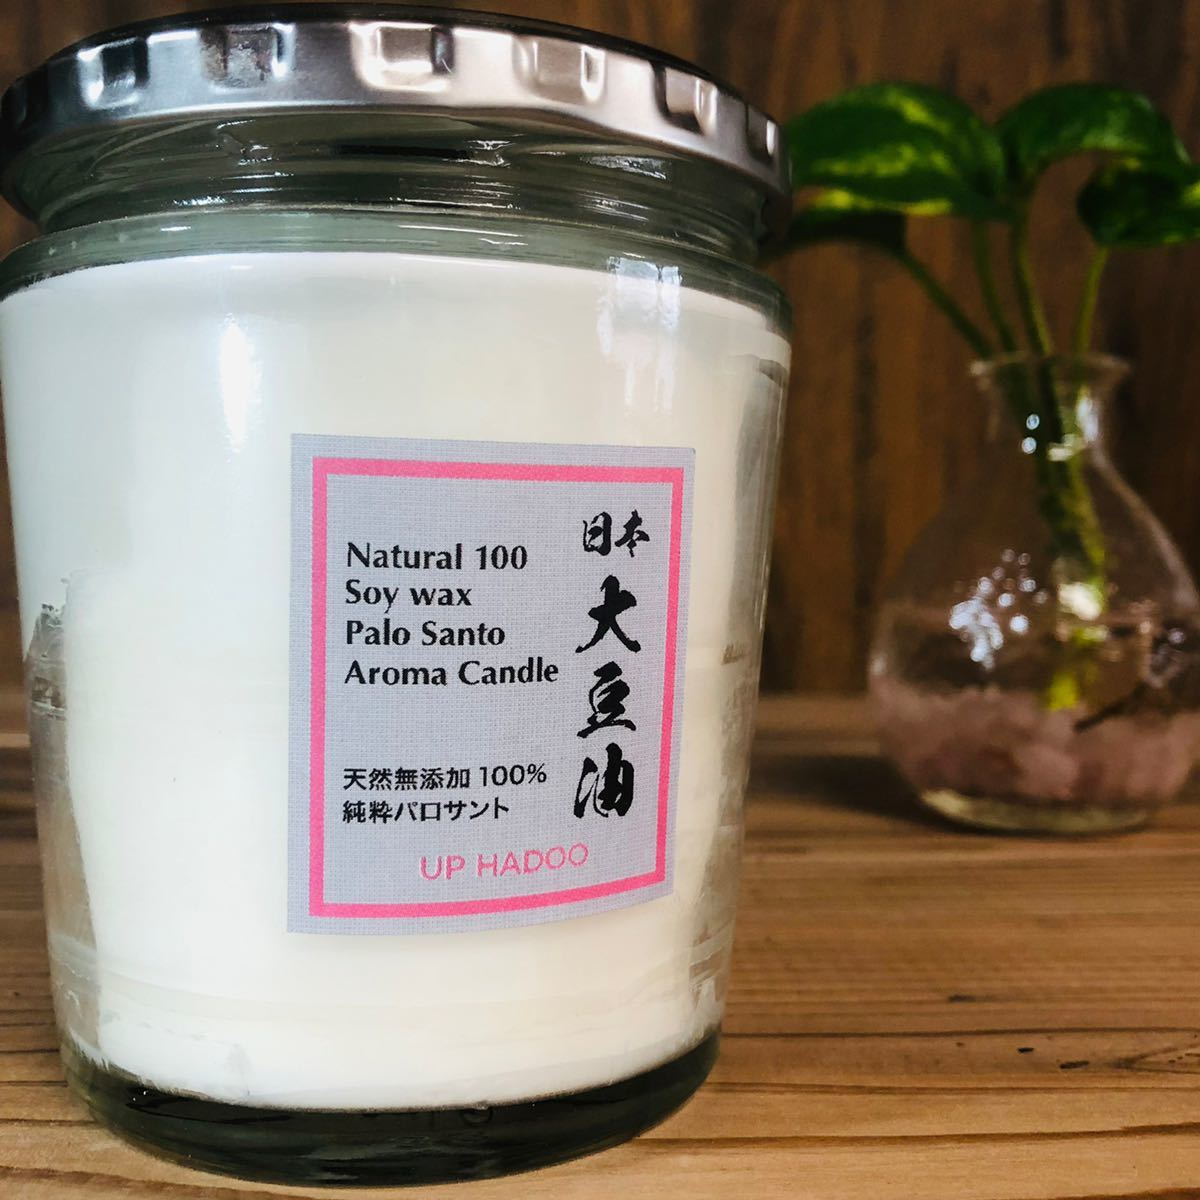  Japan soi wax paro sun to original .paro sun to. oil Japan hinoki cypress leather . core paro sun tosoi candle aroma candle natural 100 chemistry ingredient 0 UP HADOO